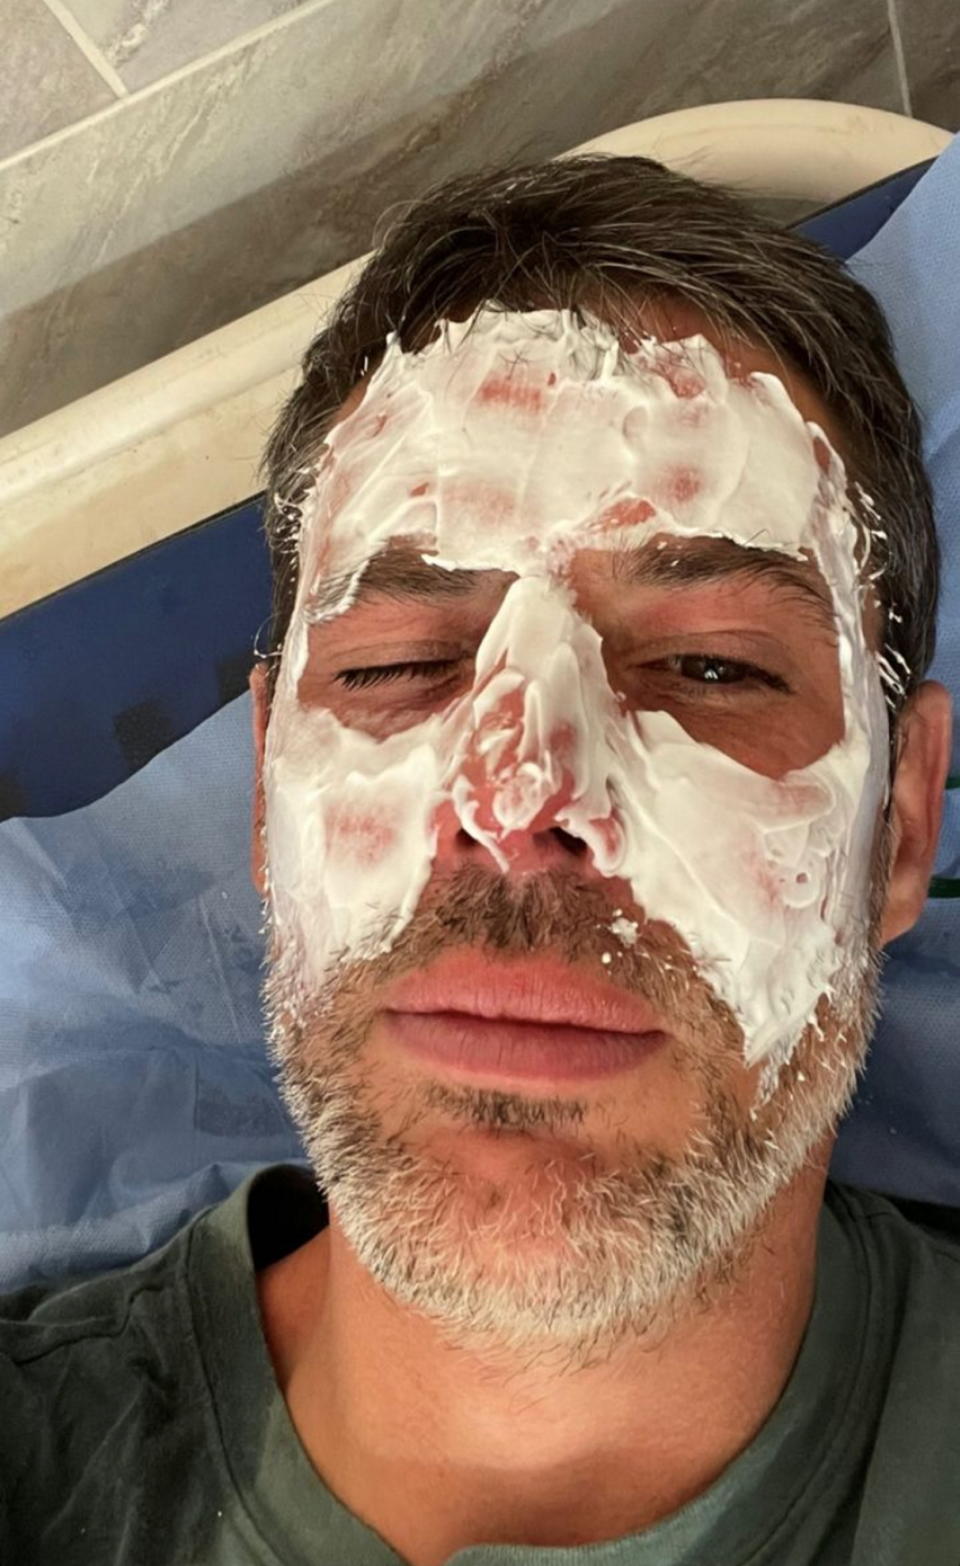 Jérémie Gautrelet's facial burns being treated. (SWNS)